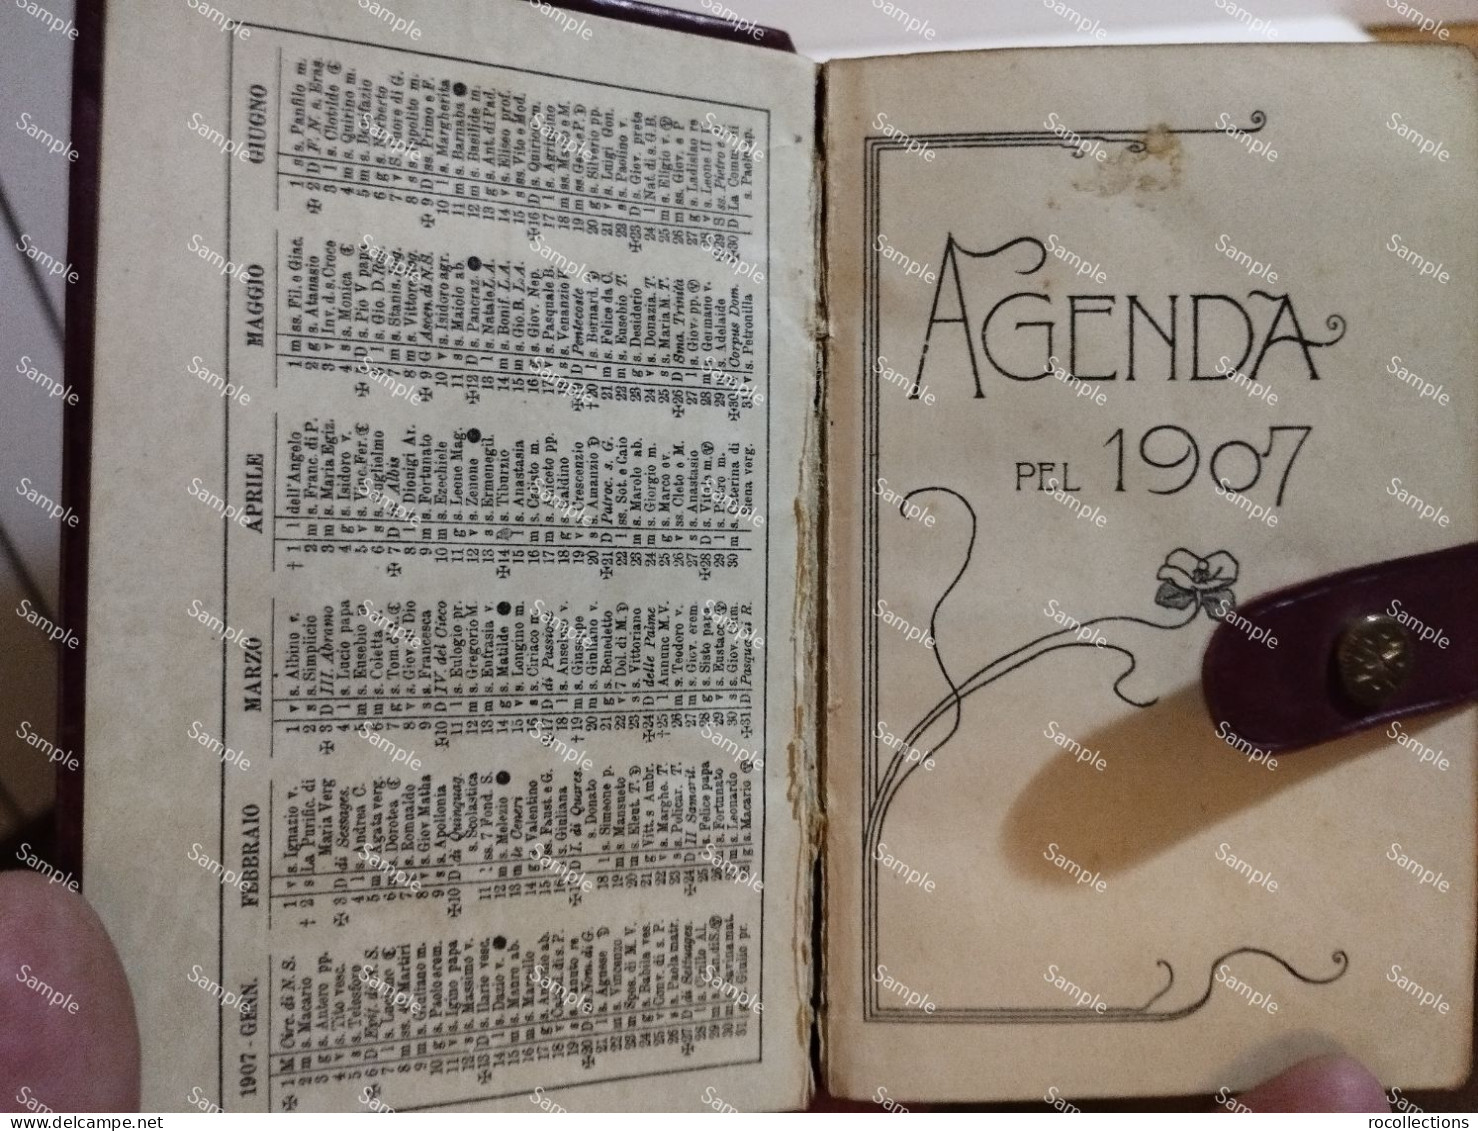 Italy Italia AGENDA 1907. - Other Book Accessories